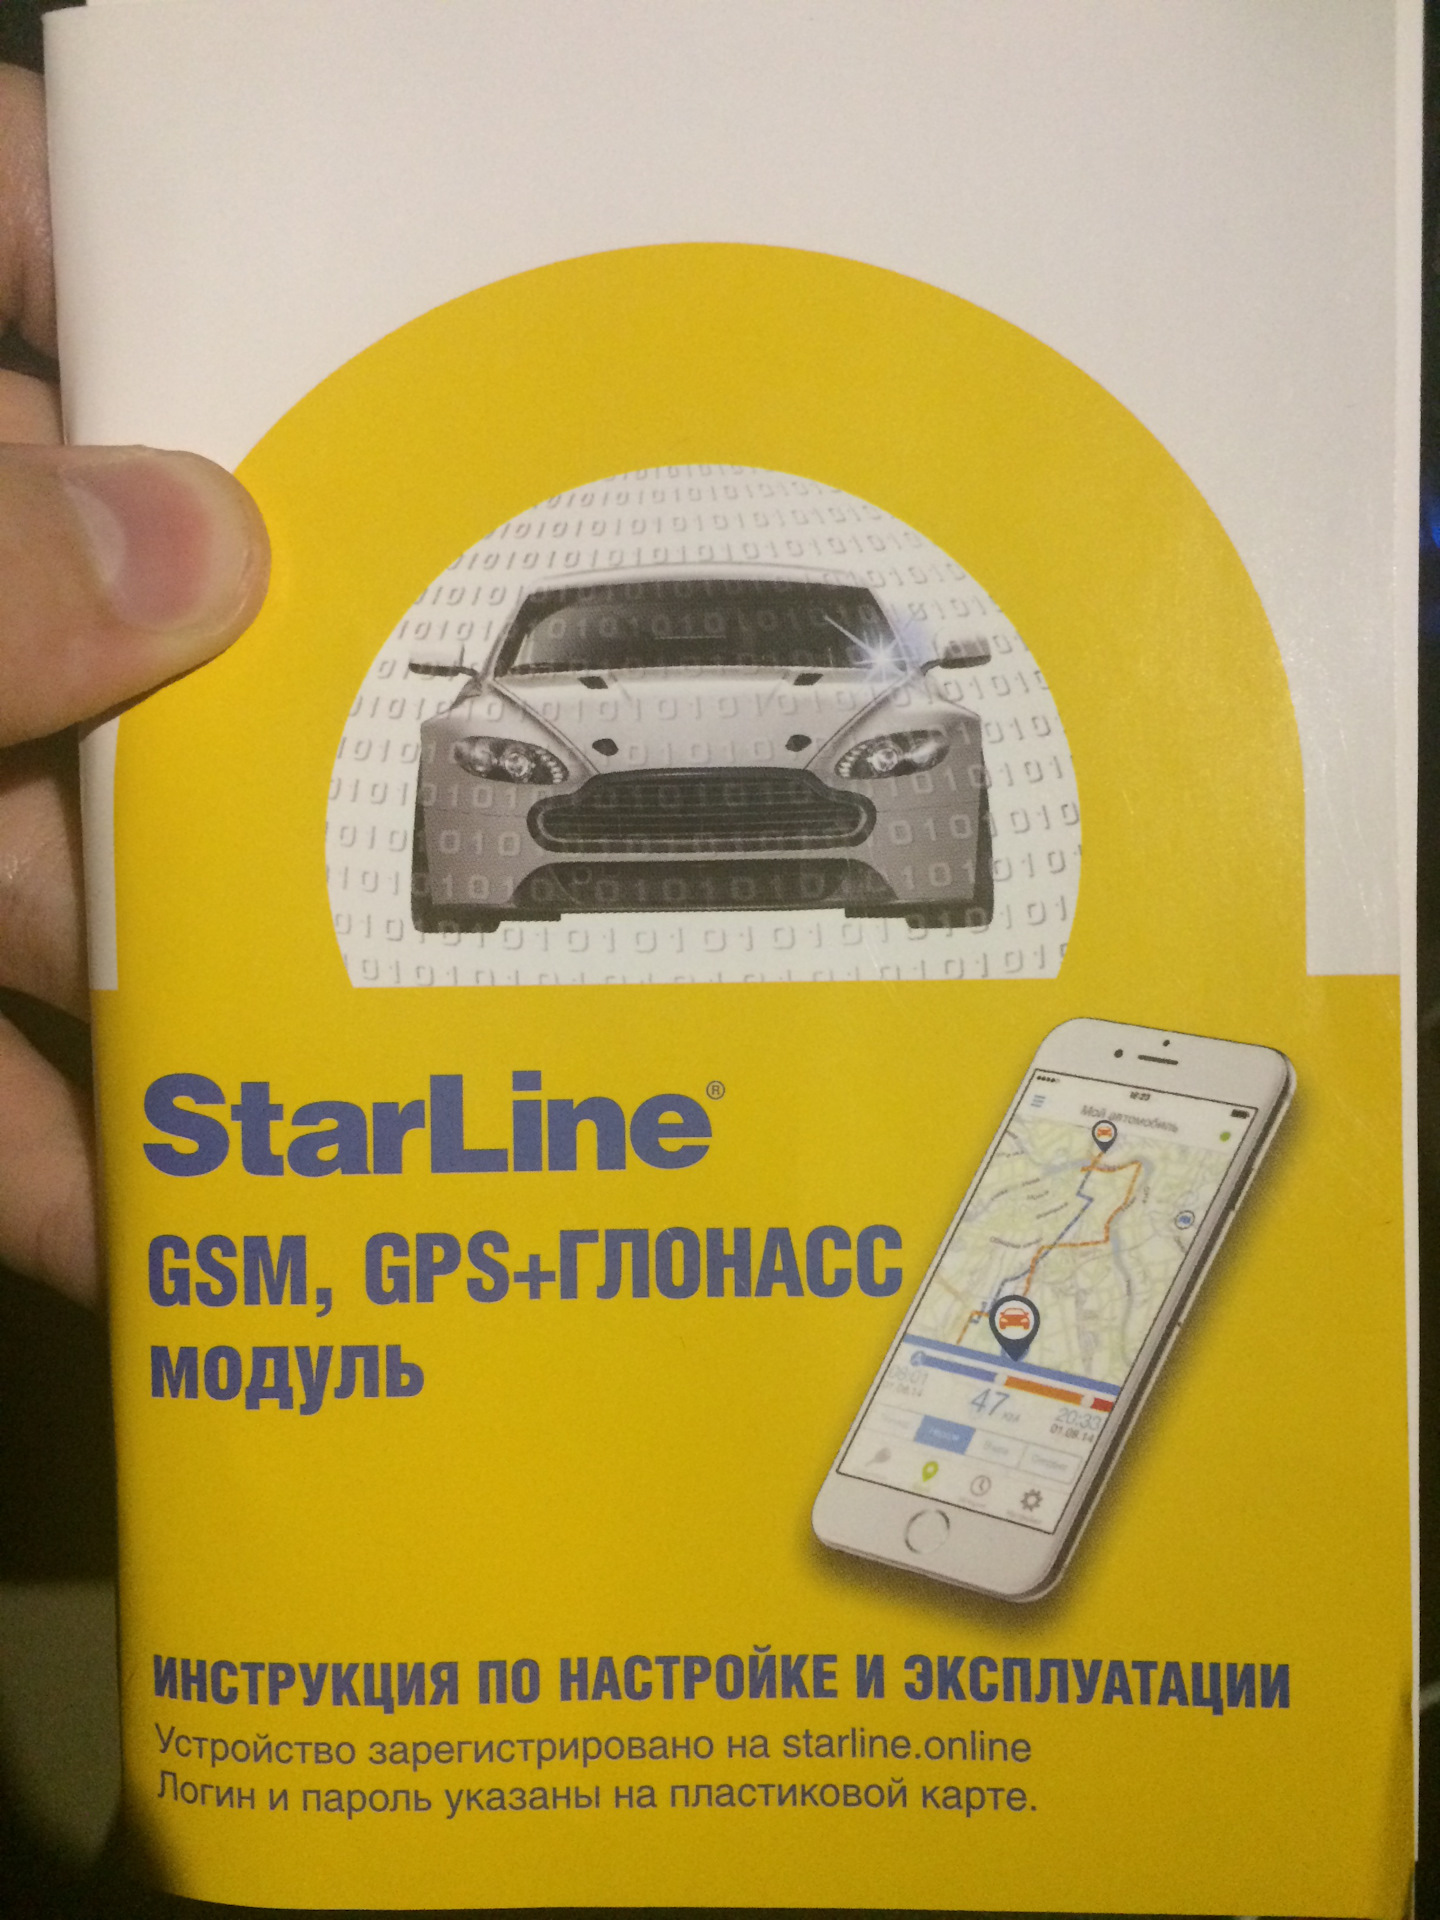 Старлайн gsm цена. Авто GSM модуль ГЛОНАСС. Модуль Star line мастер 6 GPS+ГЛОНАСС STARLINE 4001715. Е93старлайн отзывы. Зарегистрировать старлайн.